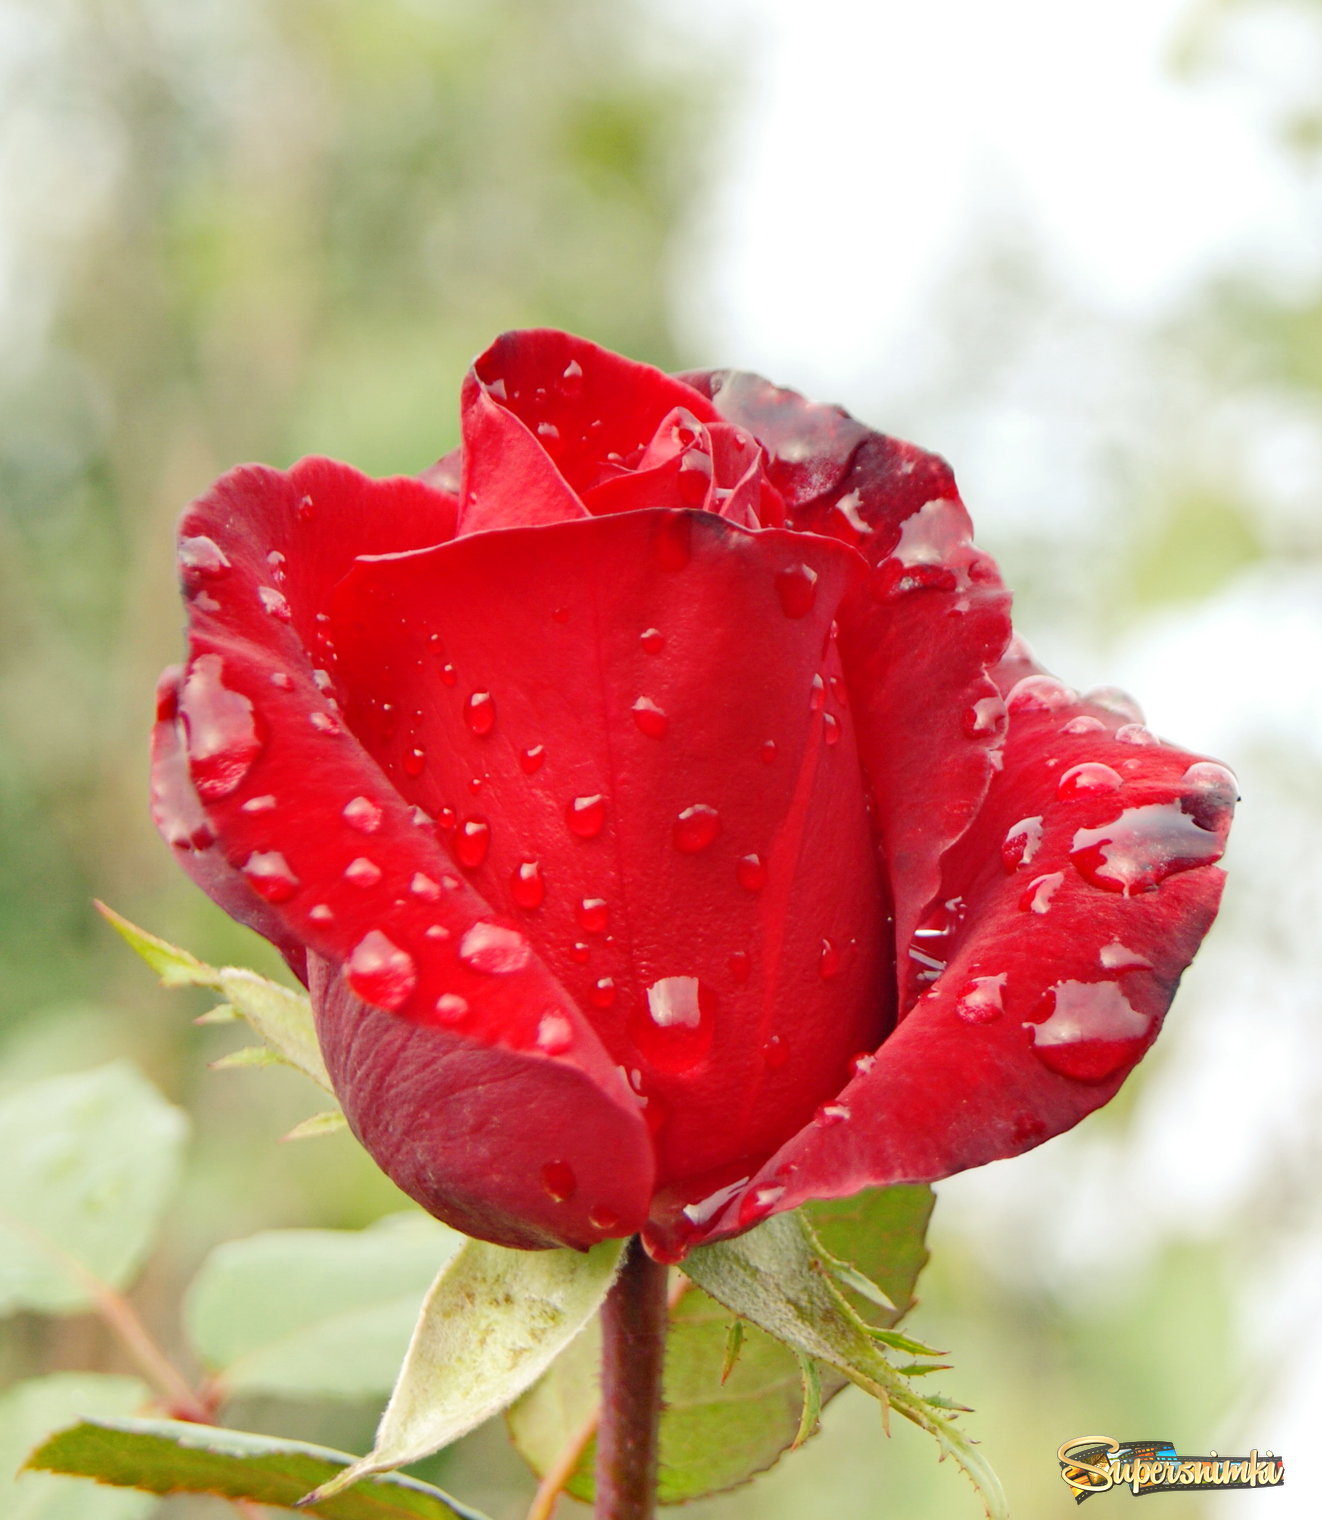 Капли дождя на лепестках розы.